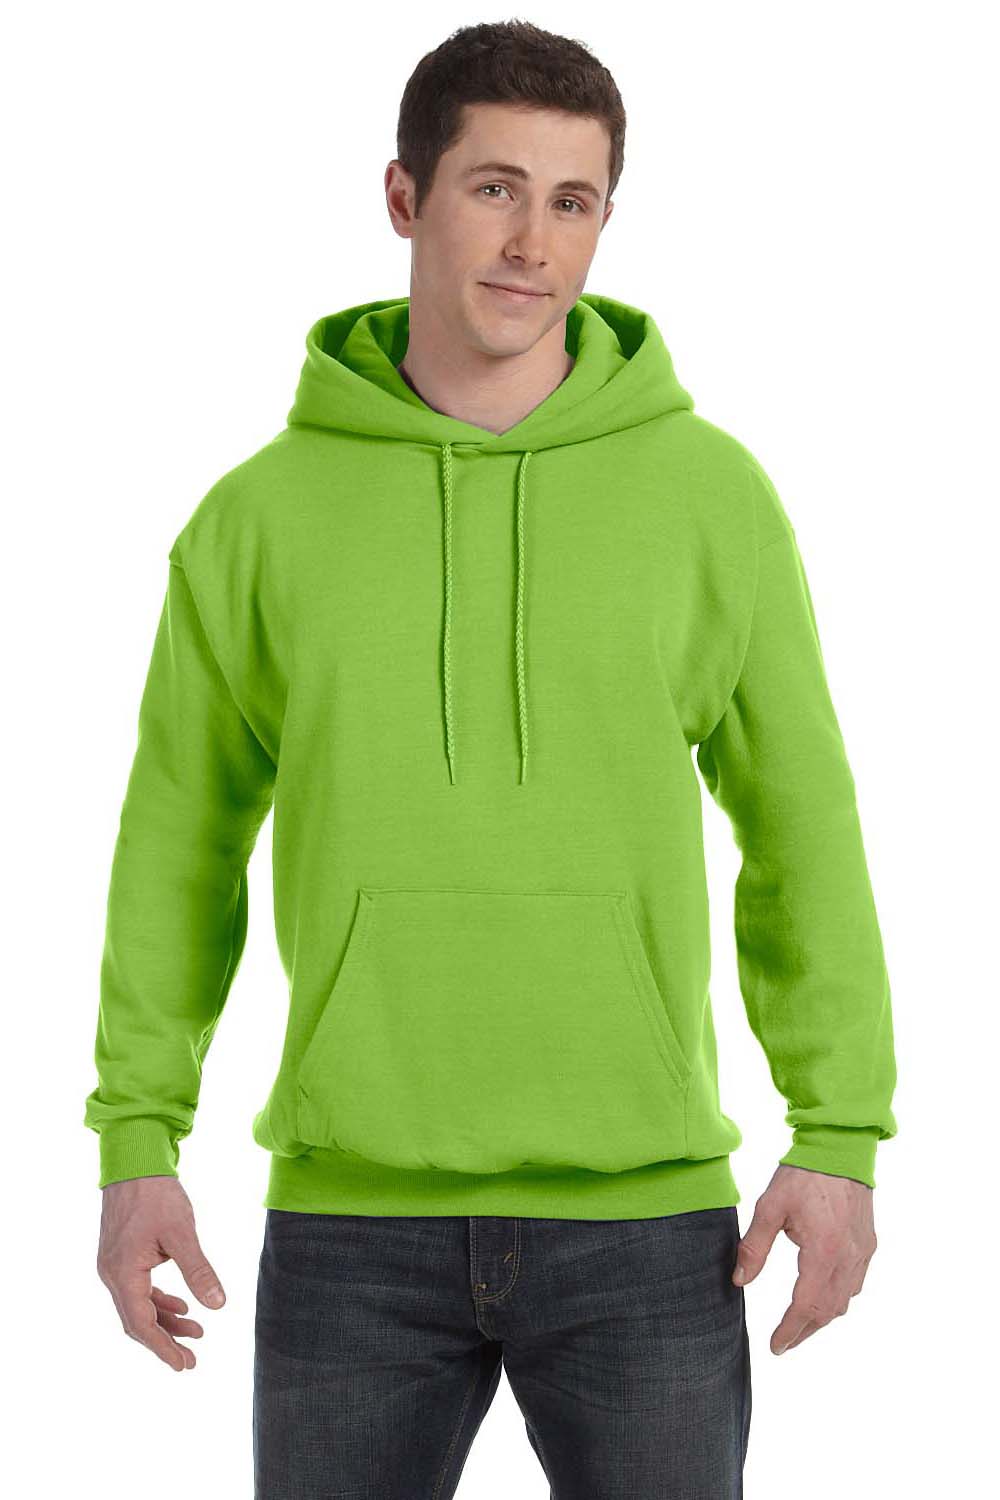 Hanes P170 Mens EcoSmart Print Pro XP Hooded Sweatshirt Hoodie Lime Green Front